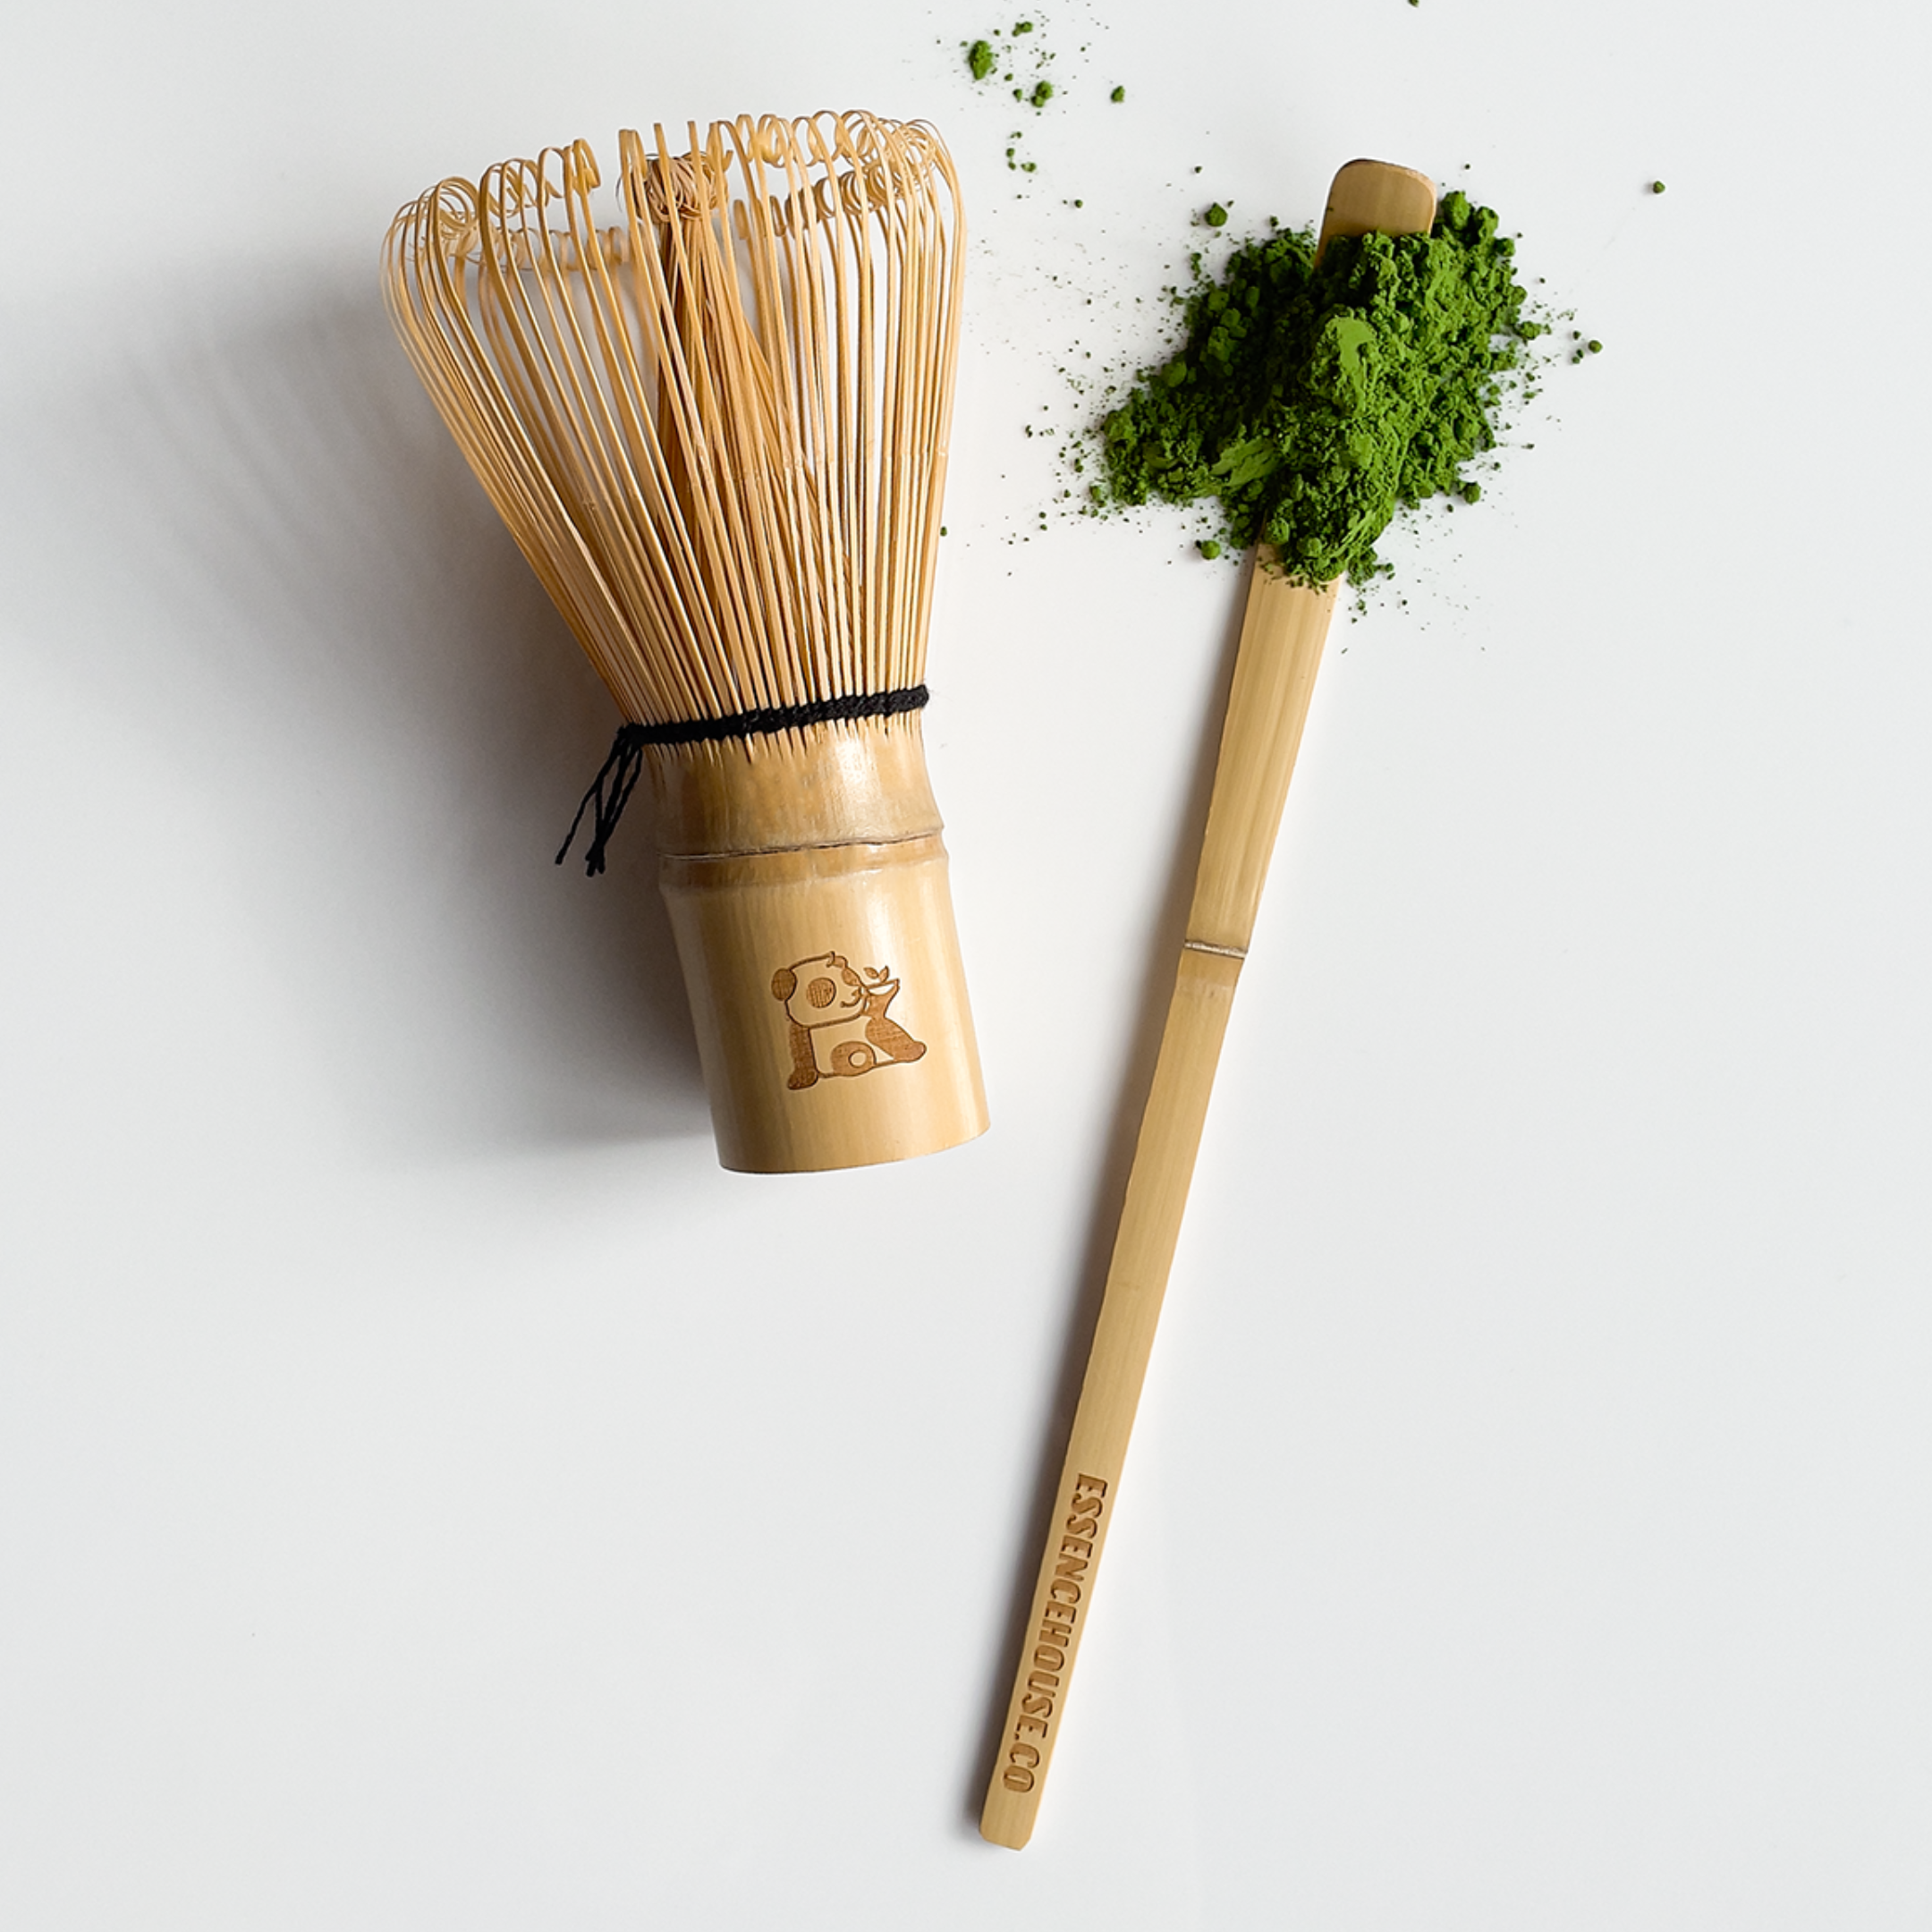 matcha bamboo whisk set bamboo spoon Chasen chashaku